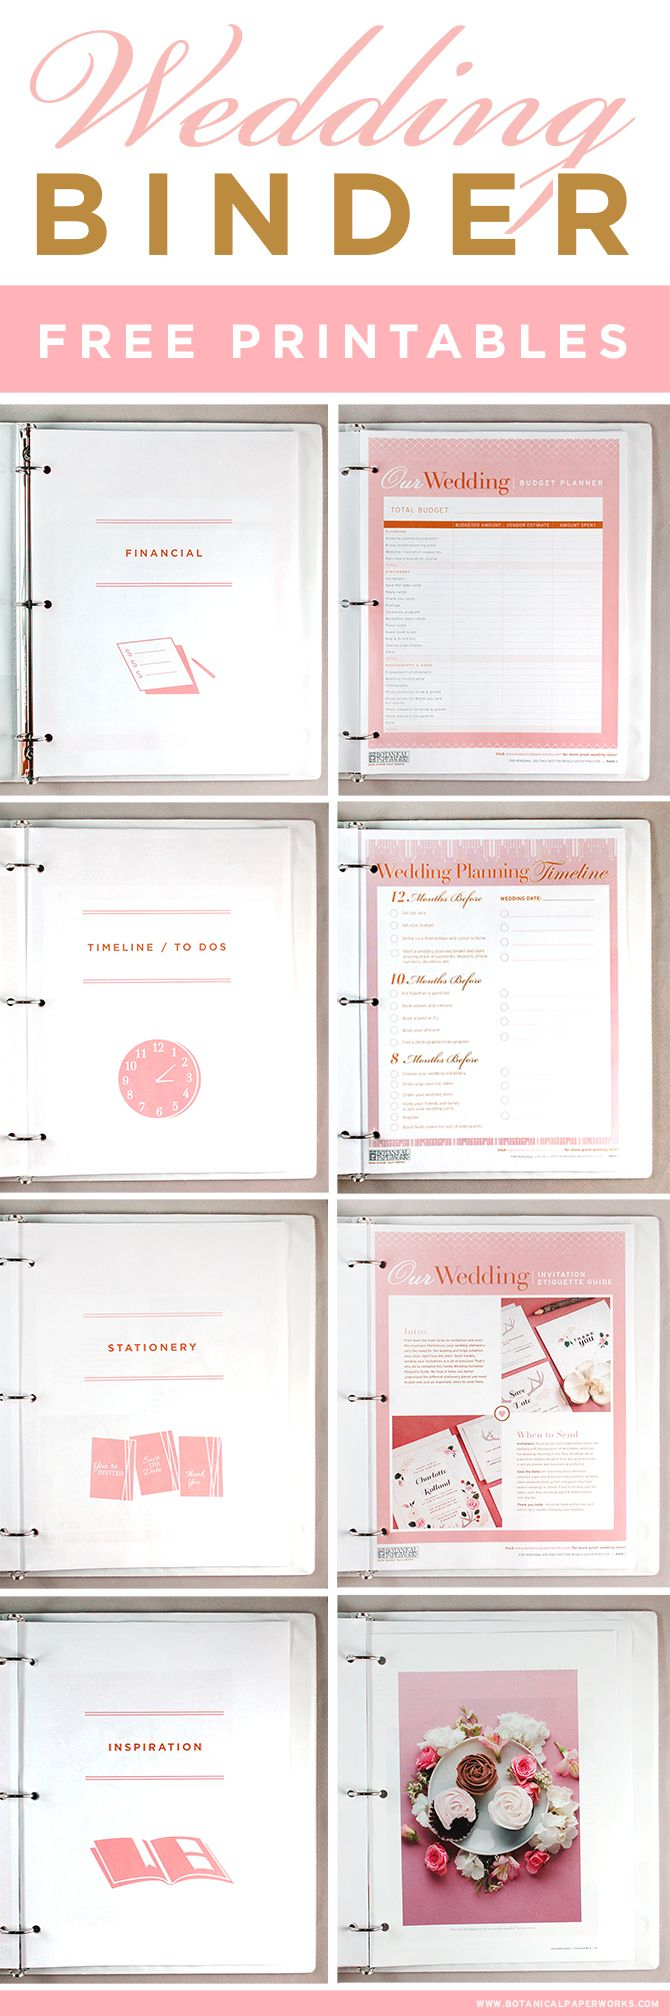 Wedding Planner Guide Free Printable – Wedding Planner Template - Free Printable Wedding Binder Templates